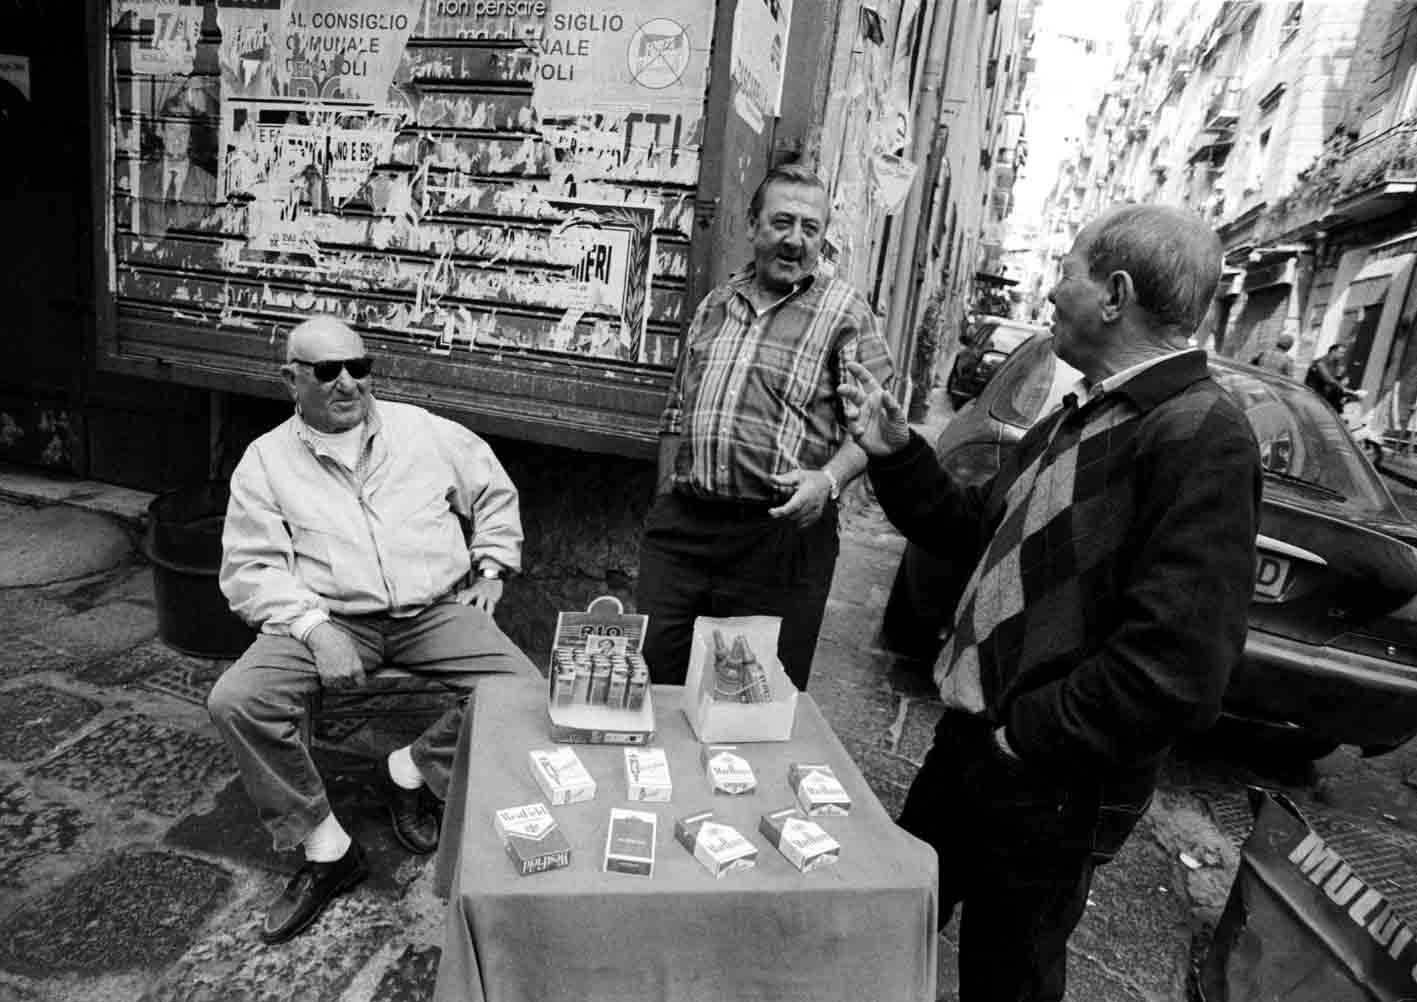 [Contraband+cigarette+sellers+Naples.jpg]